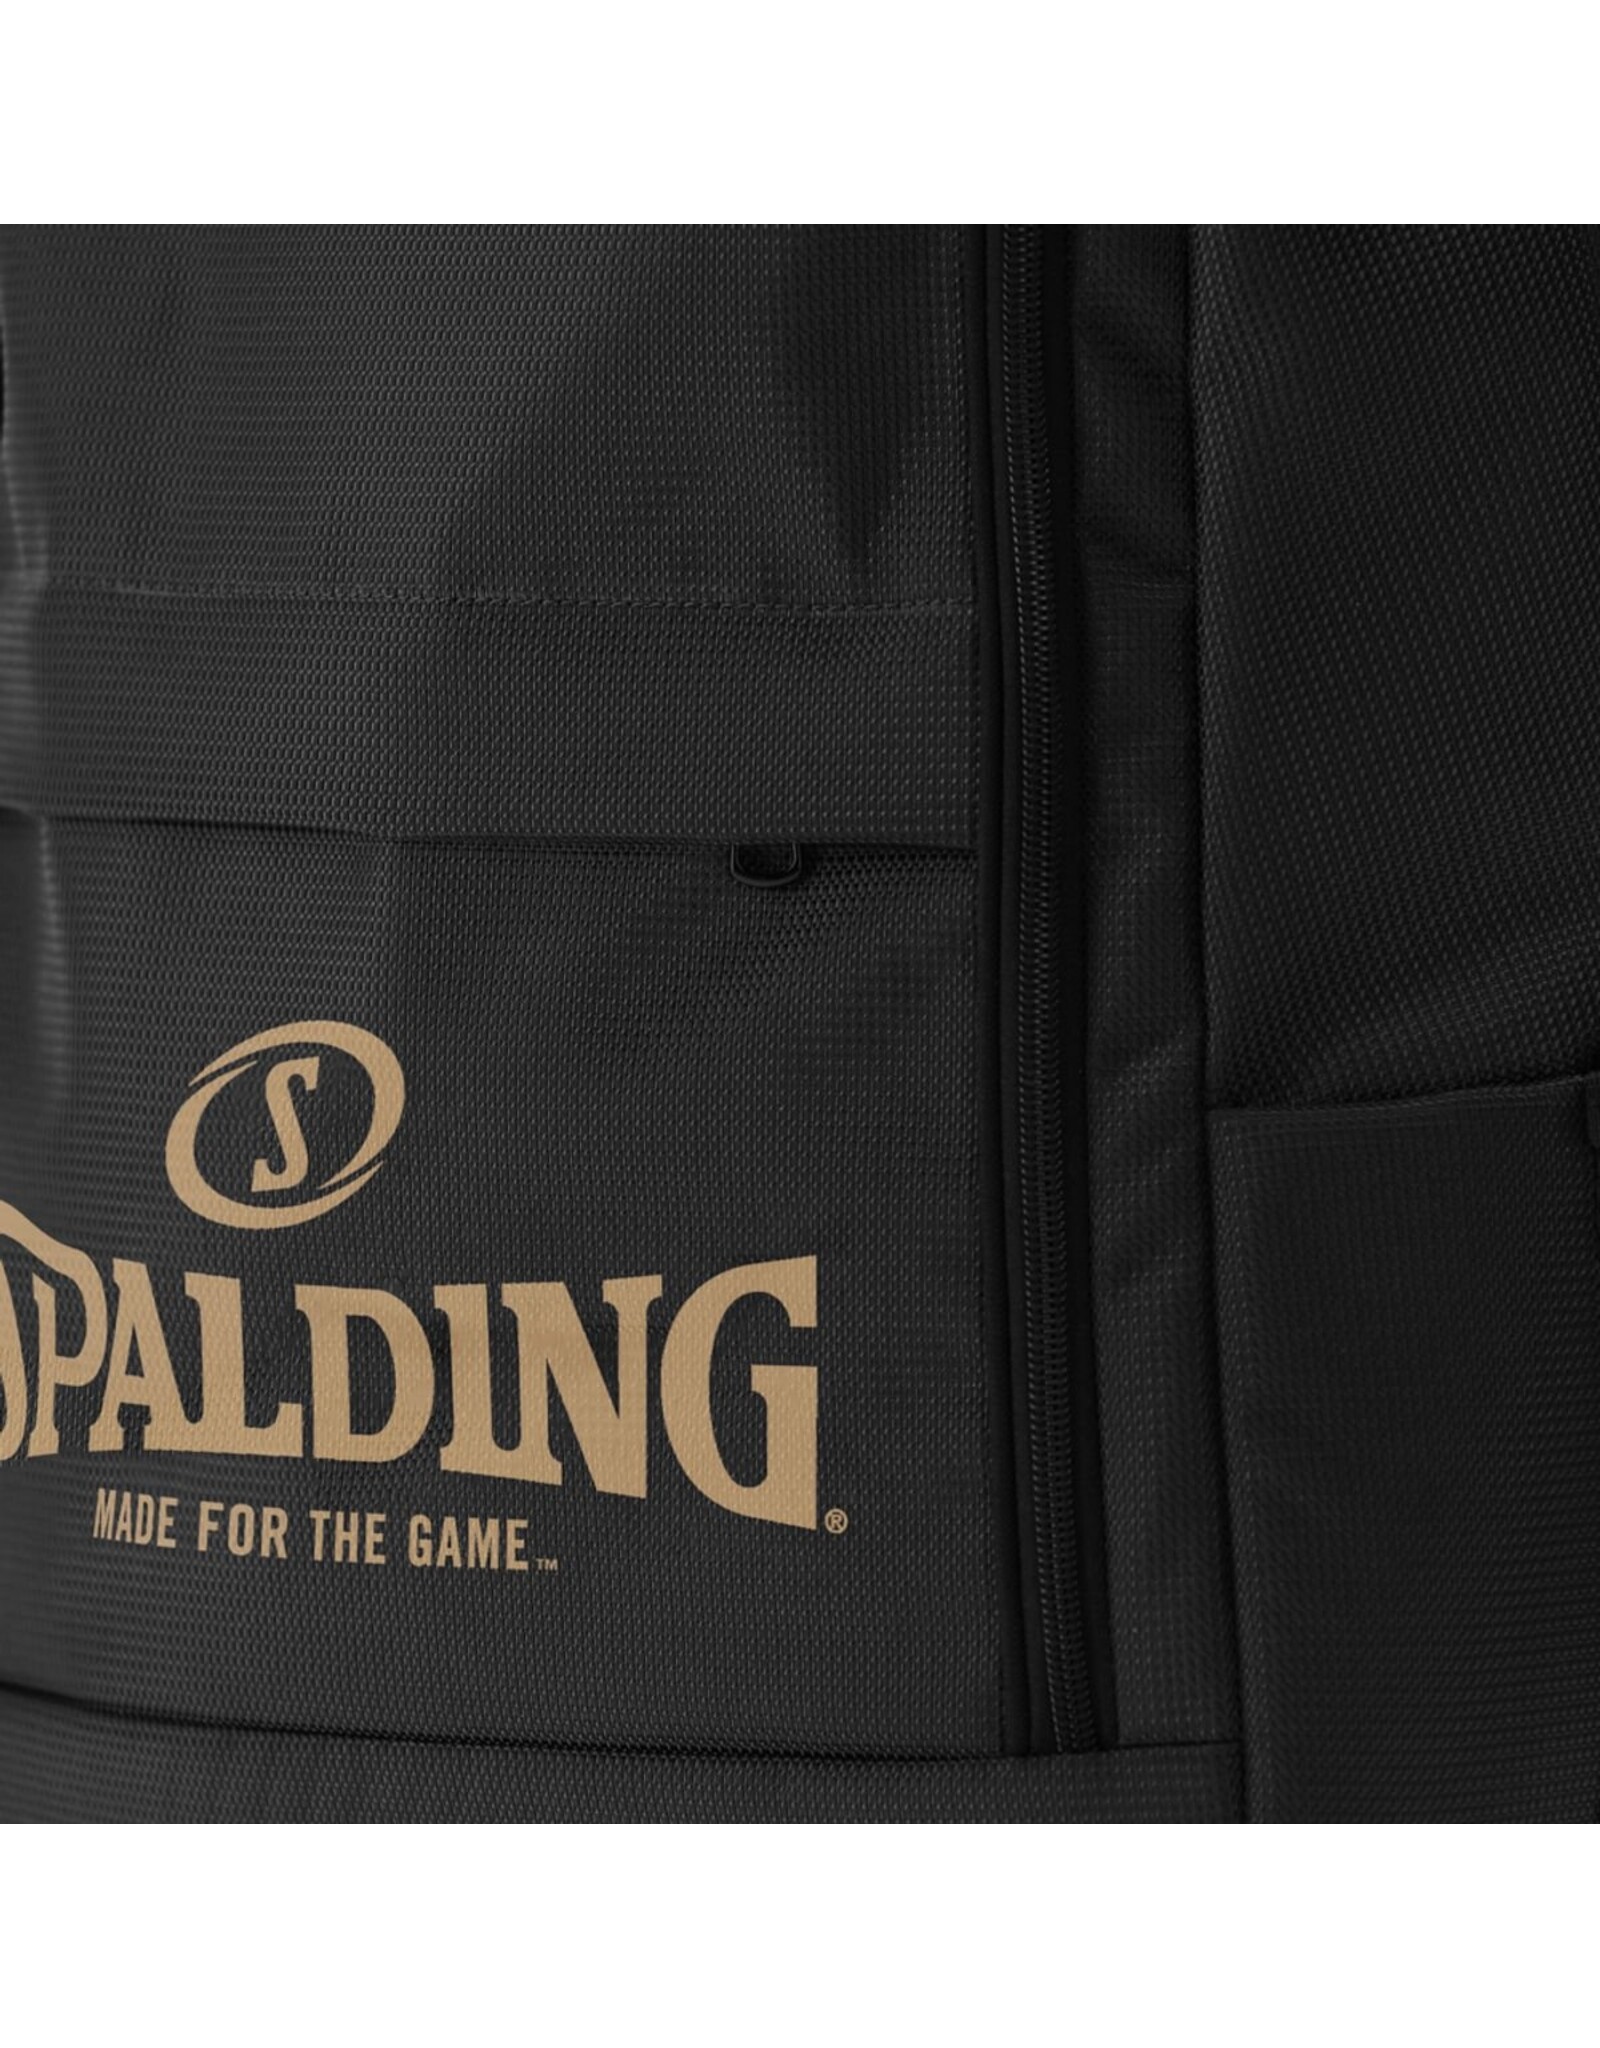 Spalding Backpack Sportsstyle-Black/Beige